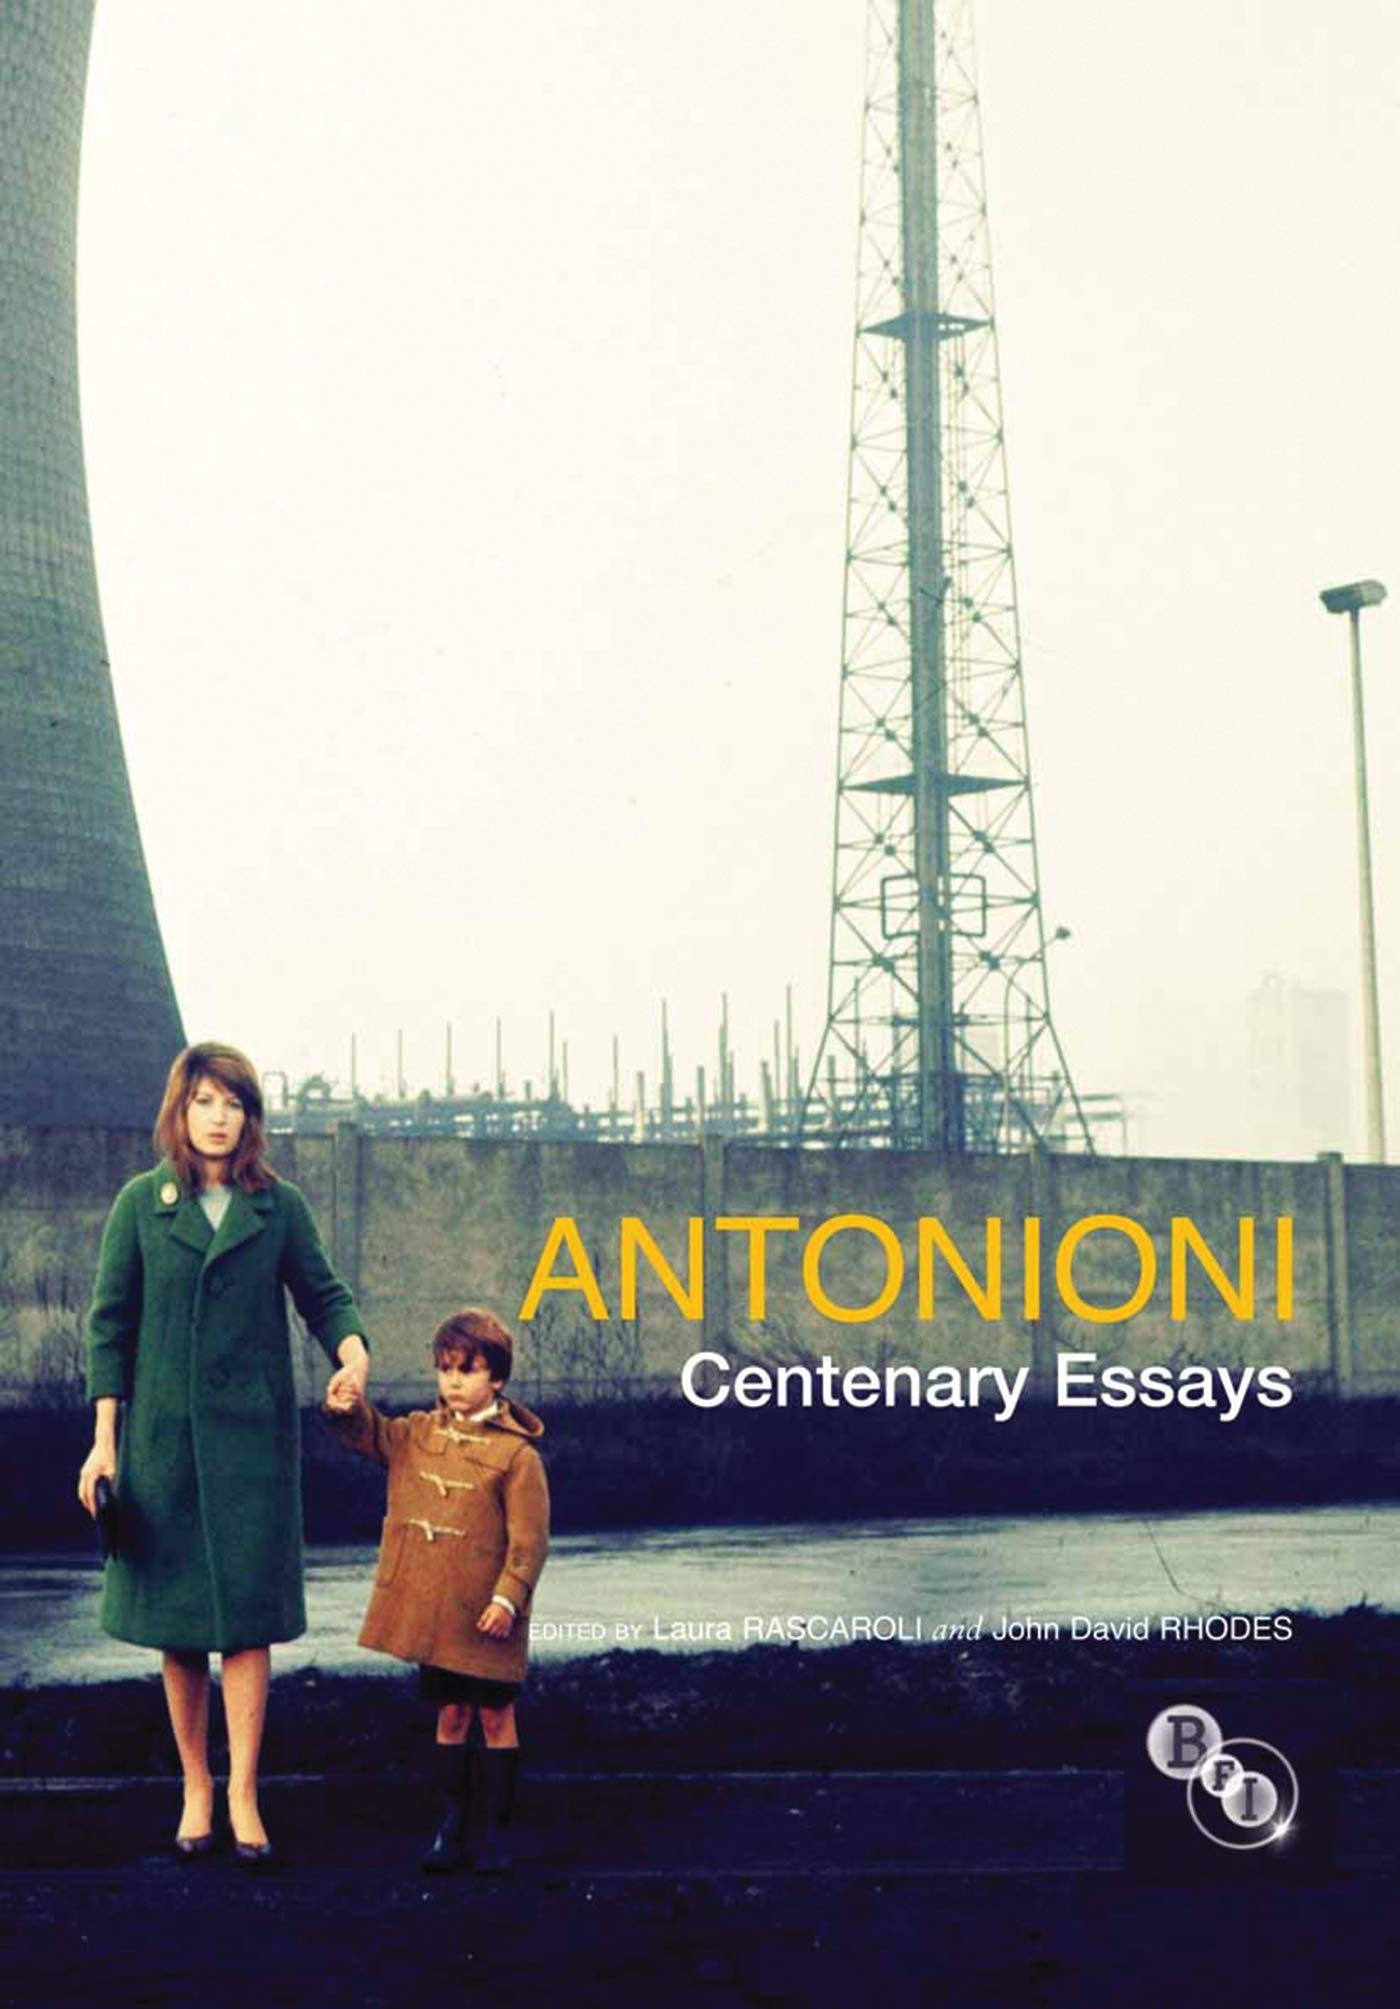 Antonioni: Centenary Essays / Laura Rascaroli, John David Rhodes